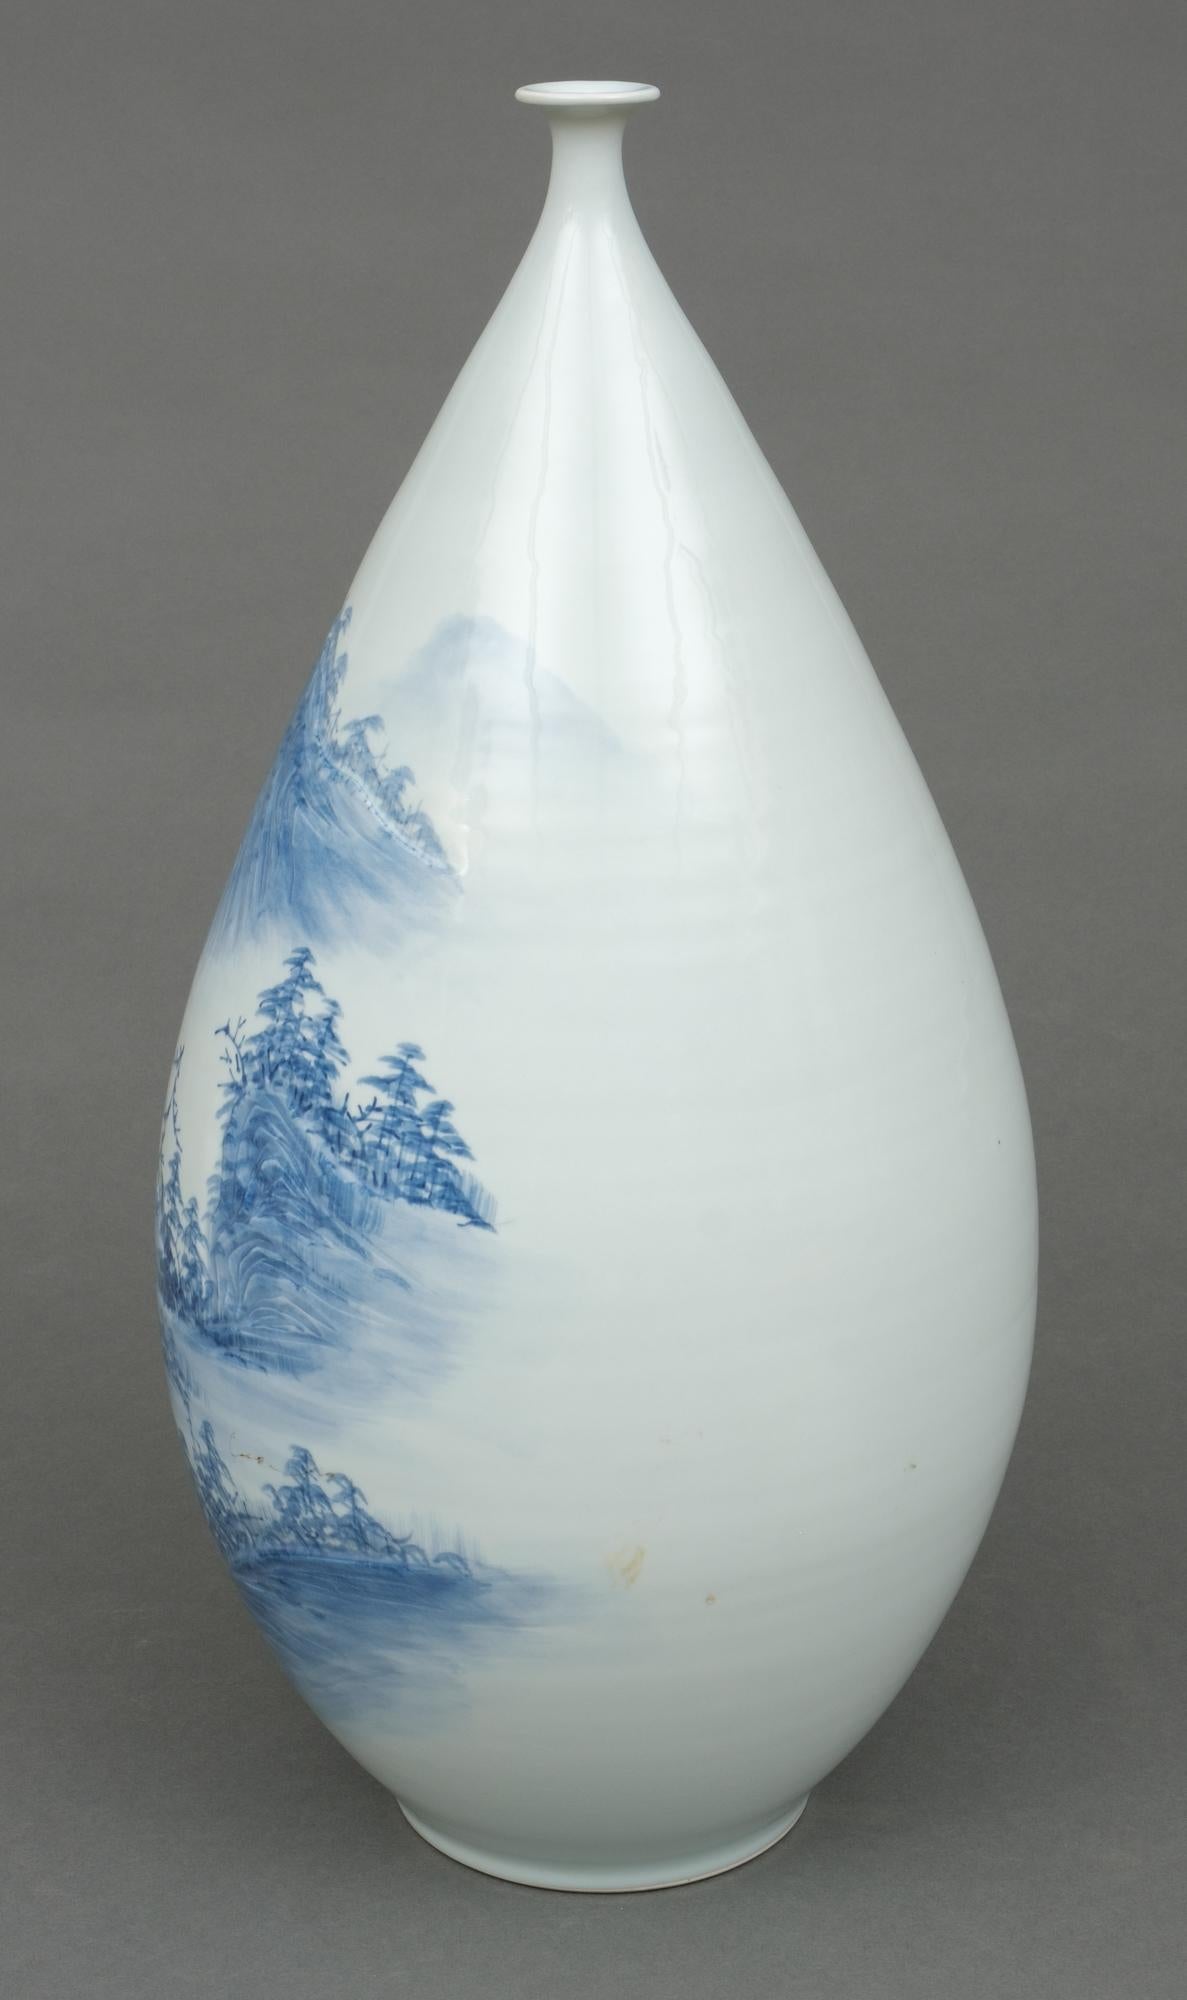 Molded Large Japanese Ovoid Porcelain Vase with Blue & White Landscape, by Shigan 芝岩